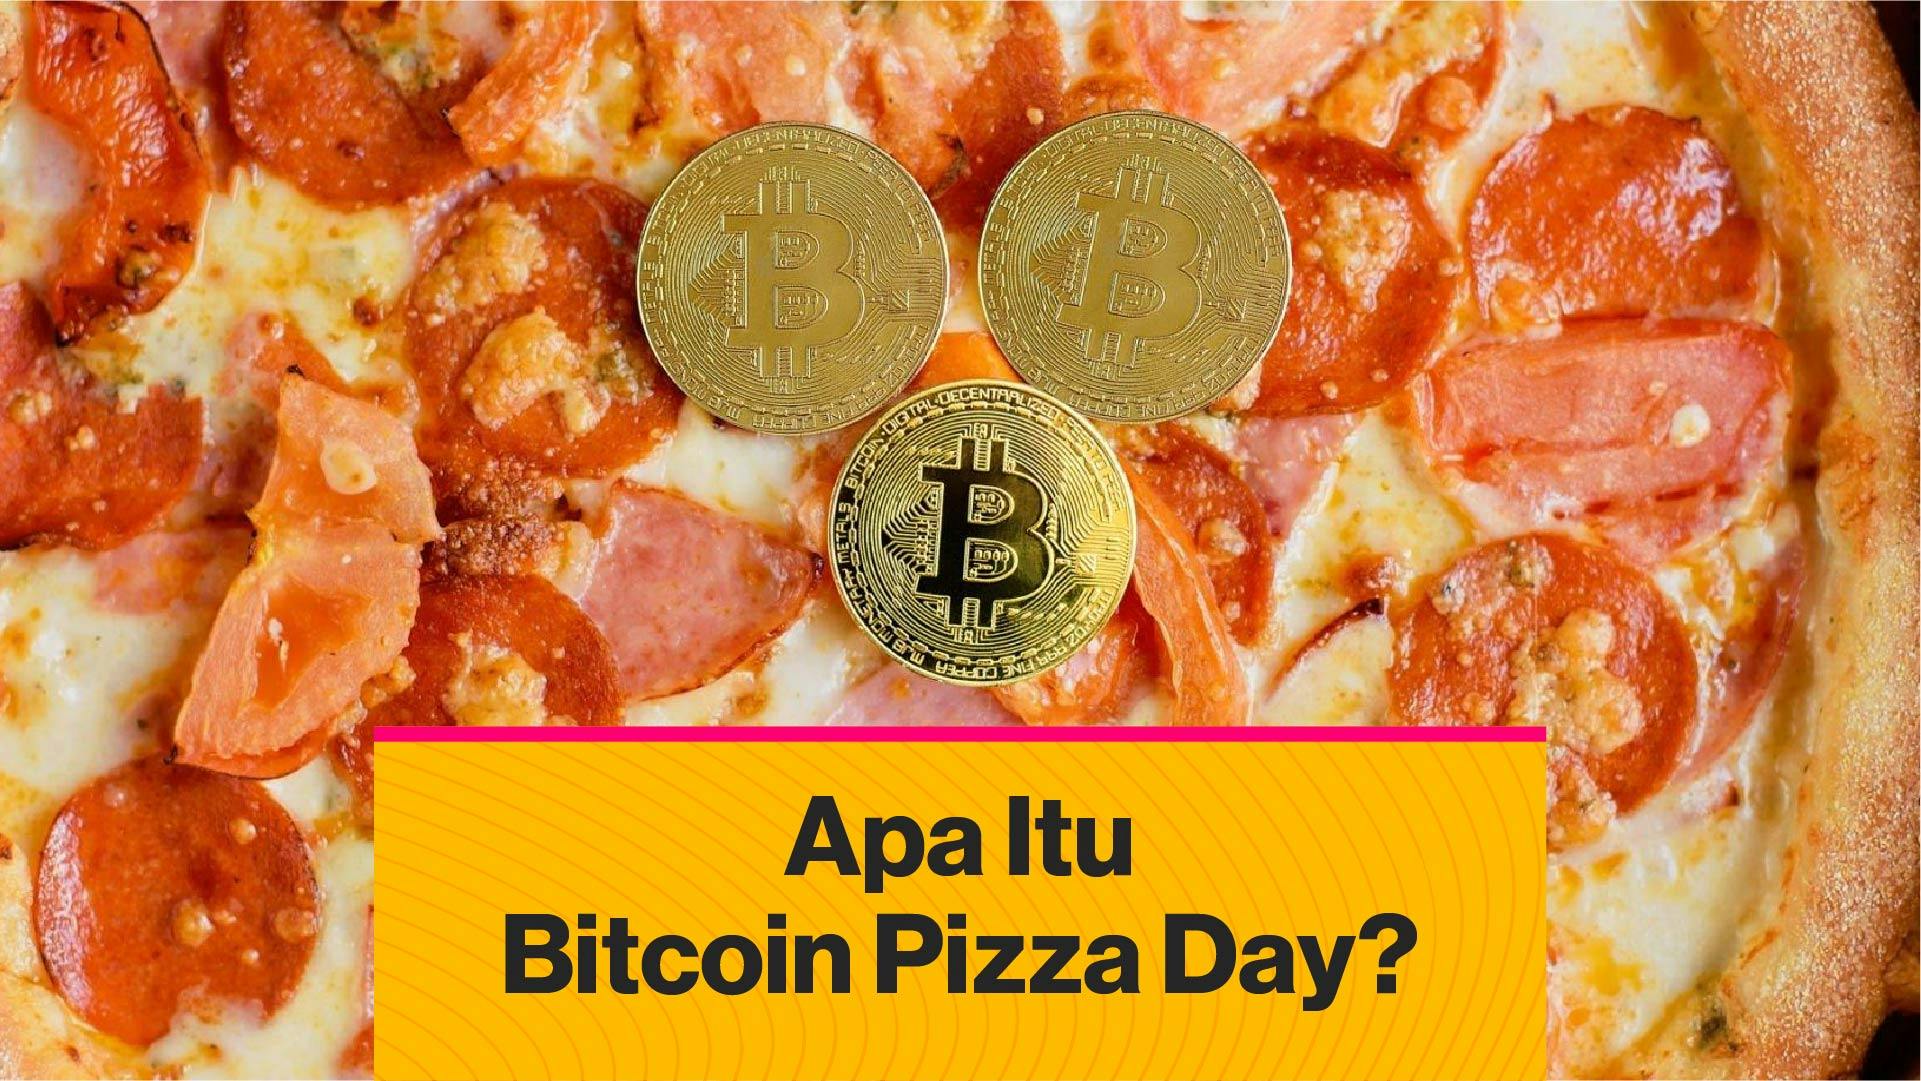 Apa Itu Bitcoin Pizza Day? (Coindesk Indonesia)